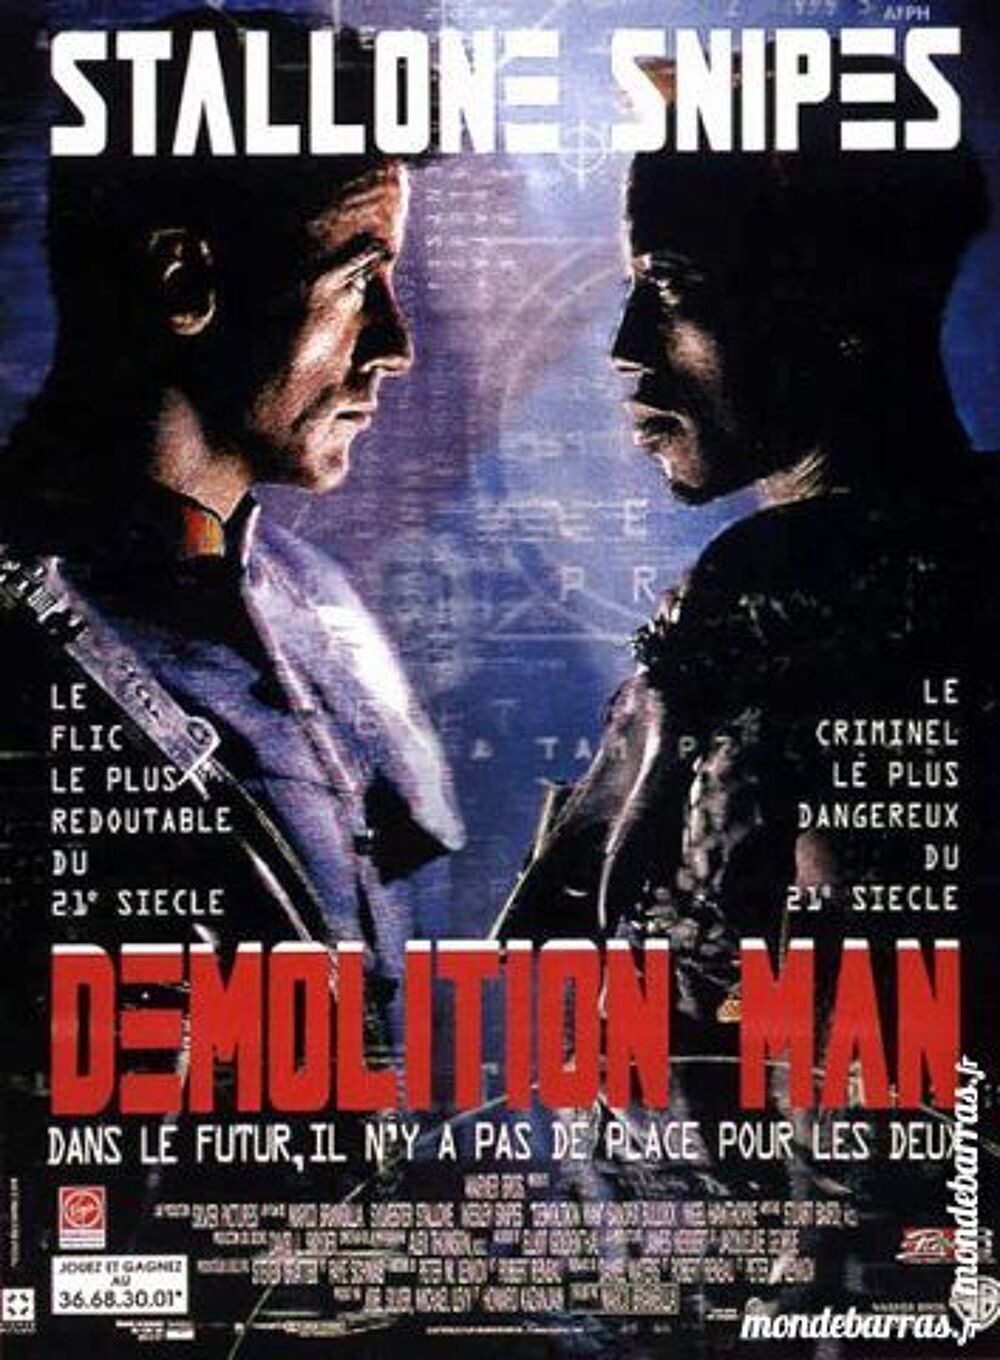 Dvd: Demolition Man (244) DVD et blu-ray